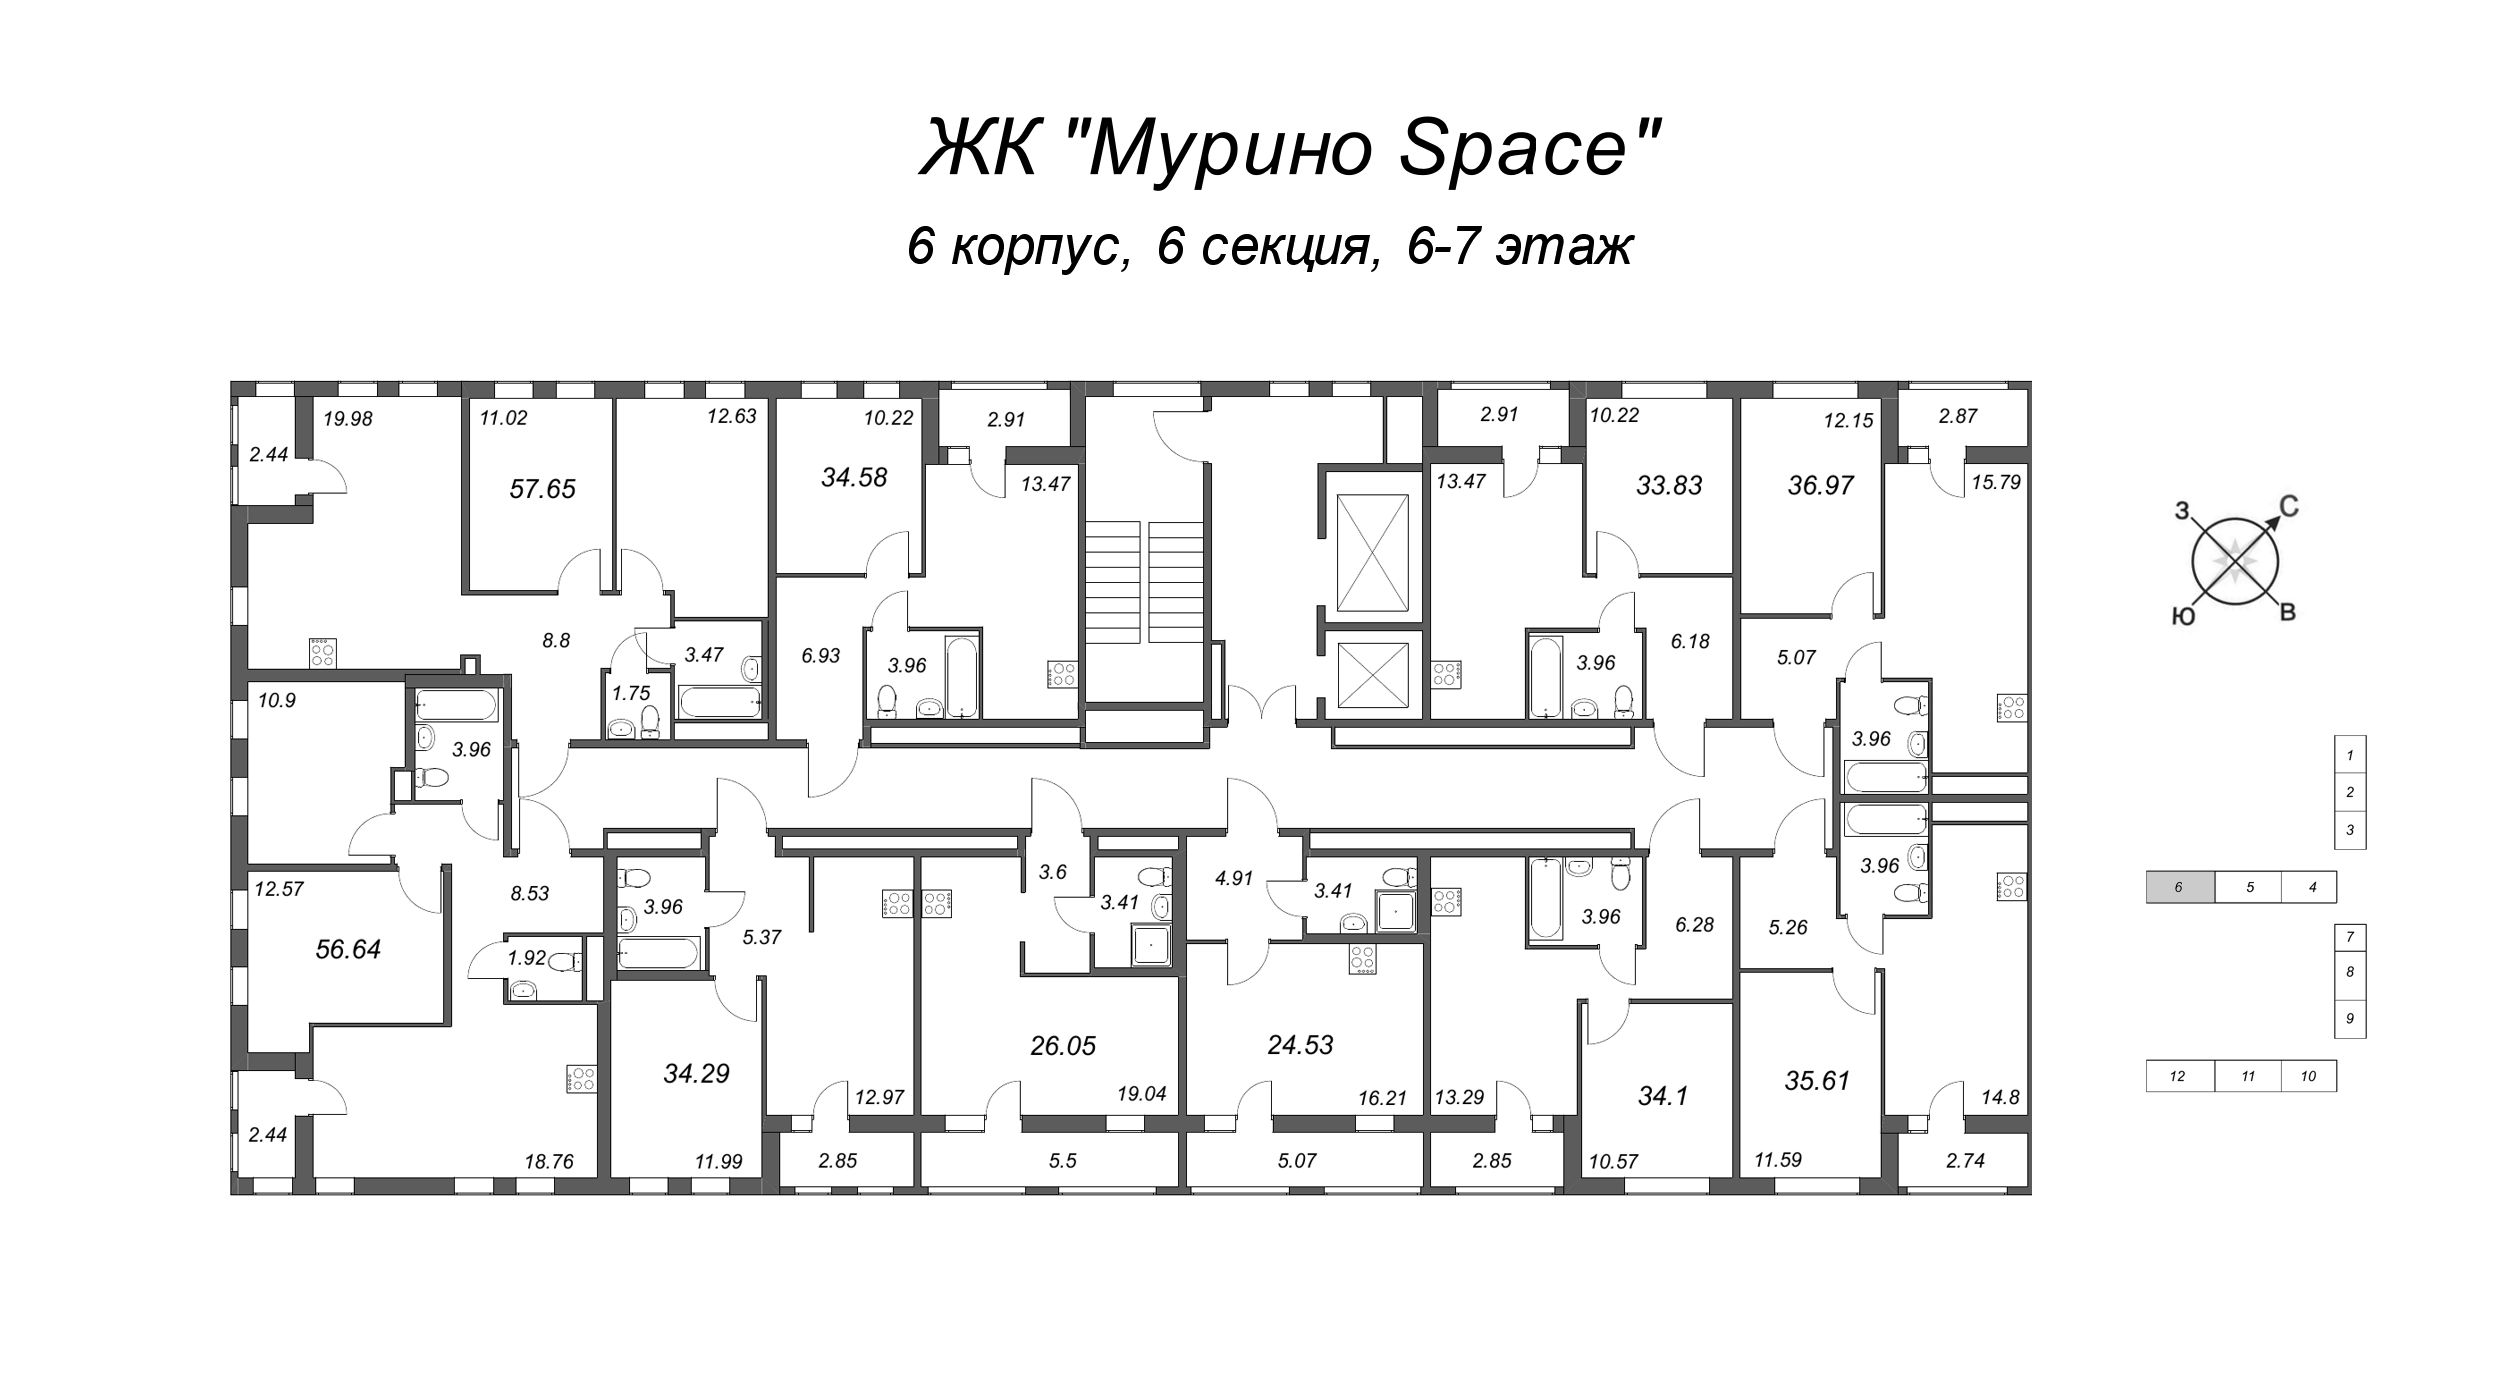 3-комнатная (Евро) квартира, 54.96 м² - планировка этажа